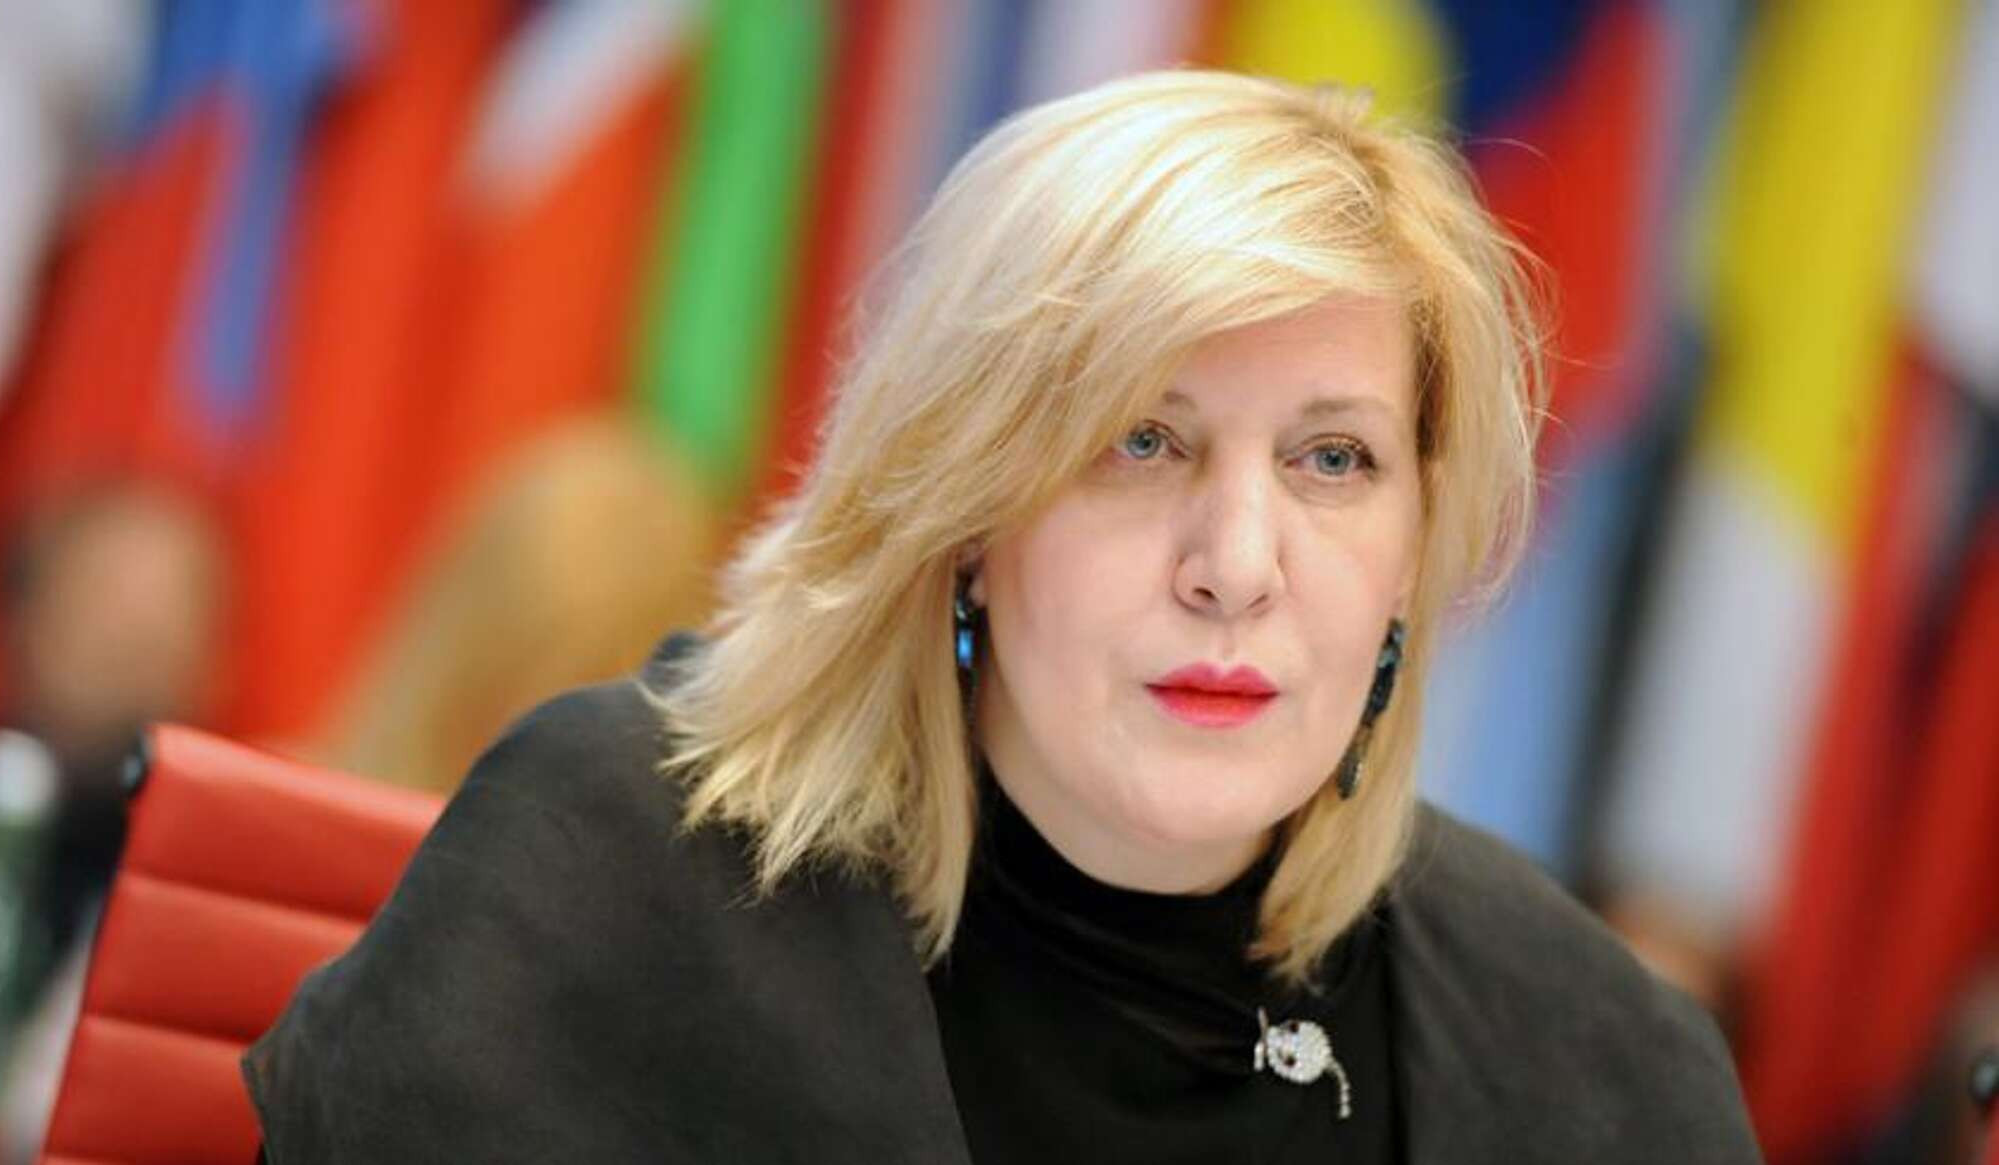 Azerbaijan should end intimidation and harassment of journalists and civil society activists, Dunja Mijatović